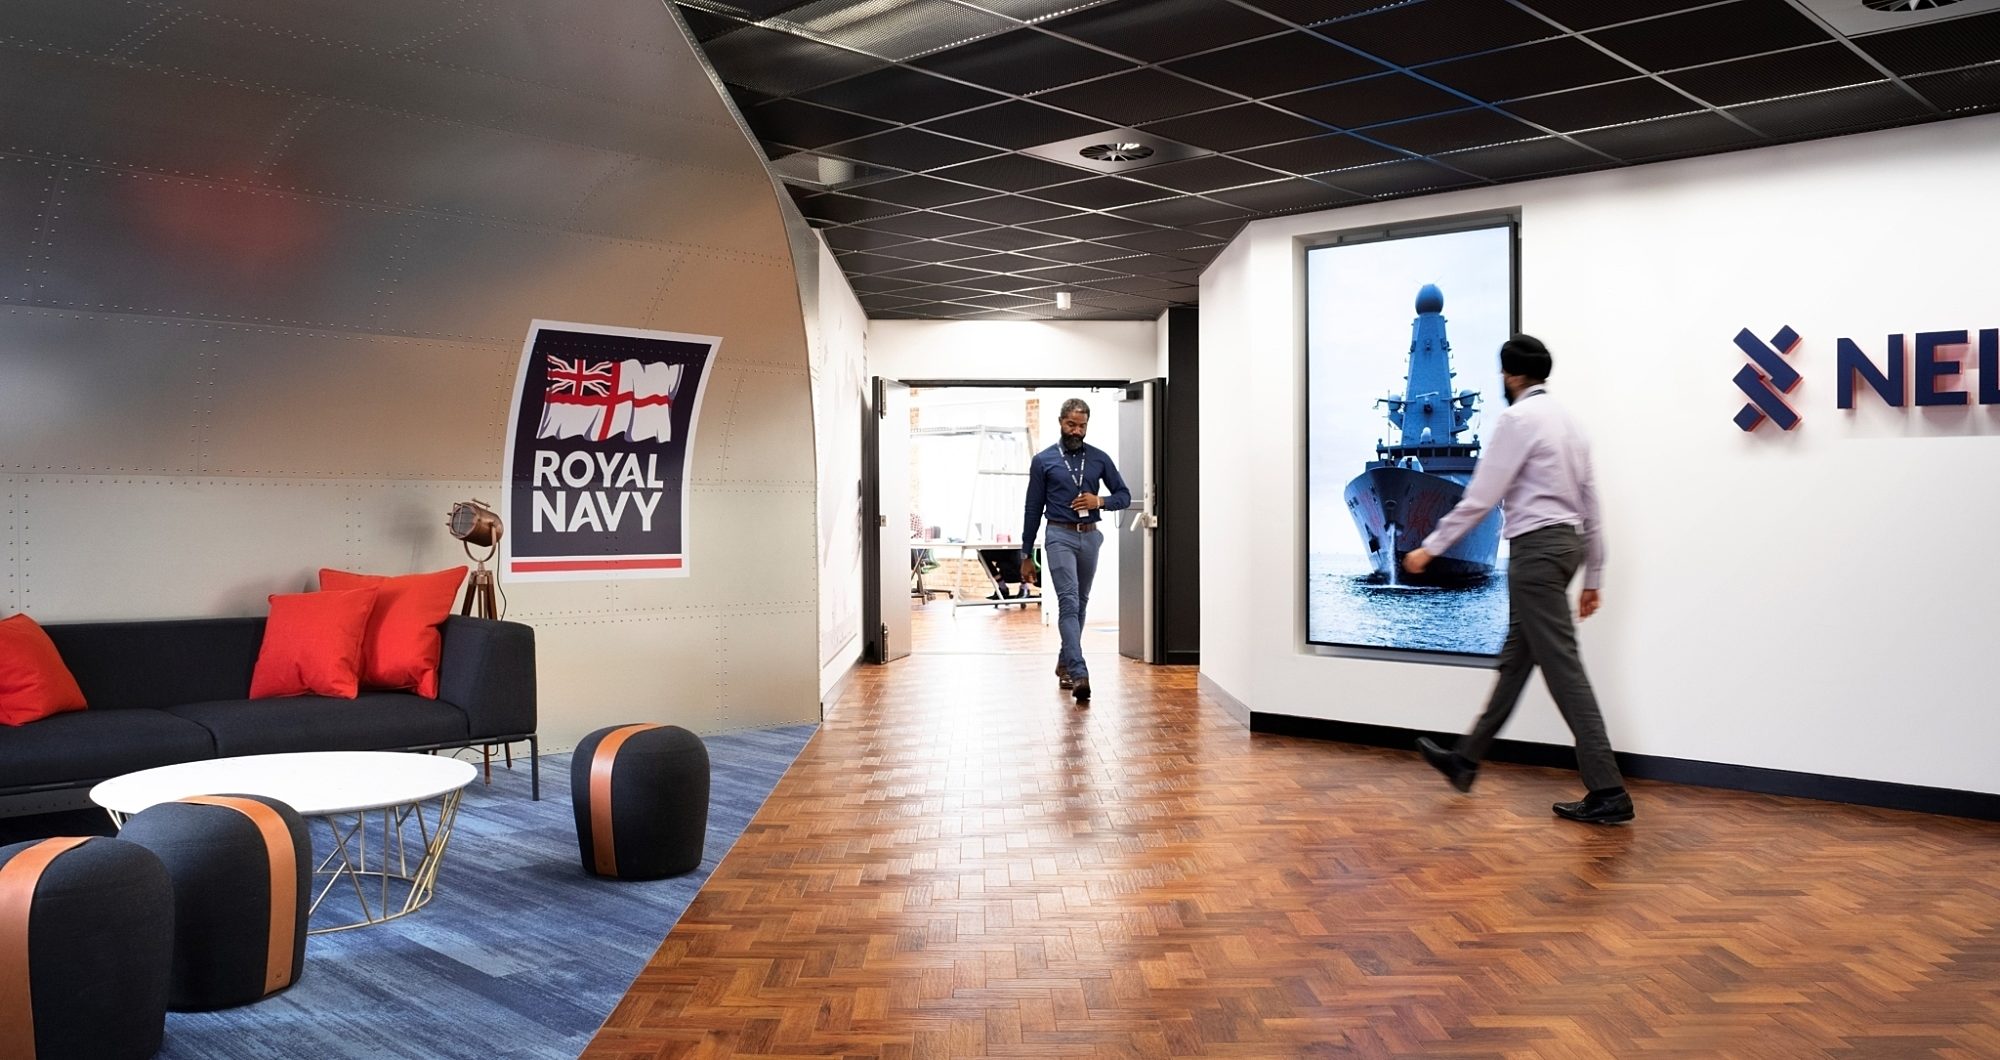 Royal Navy offices build social capital